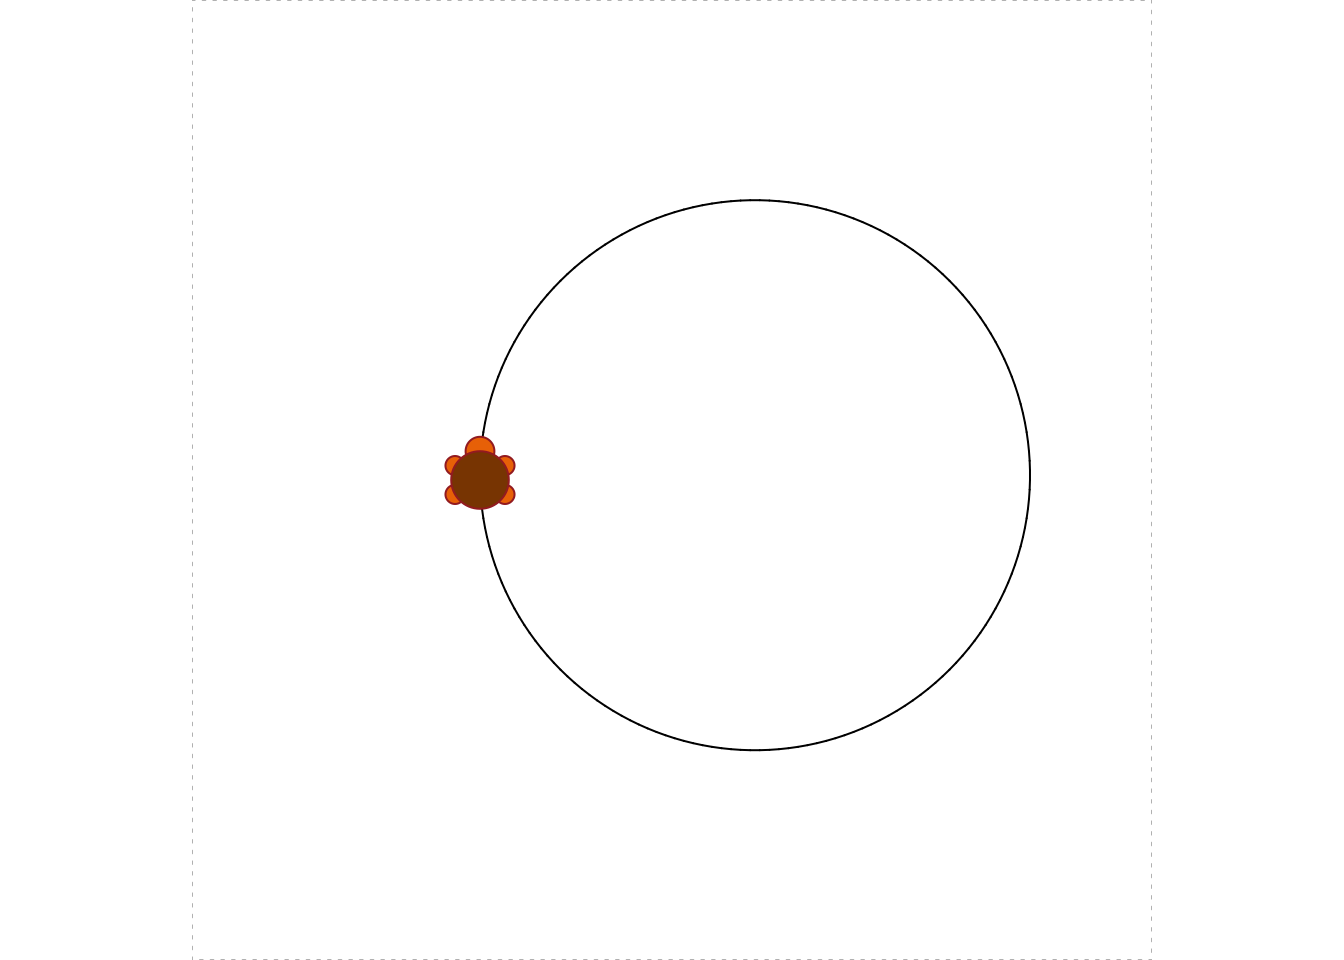 Making a circle.